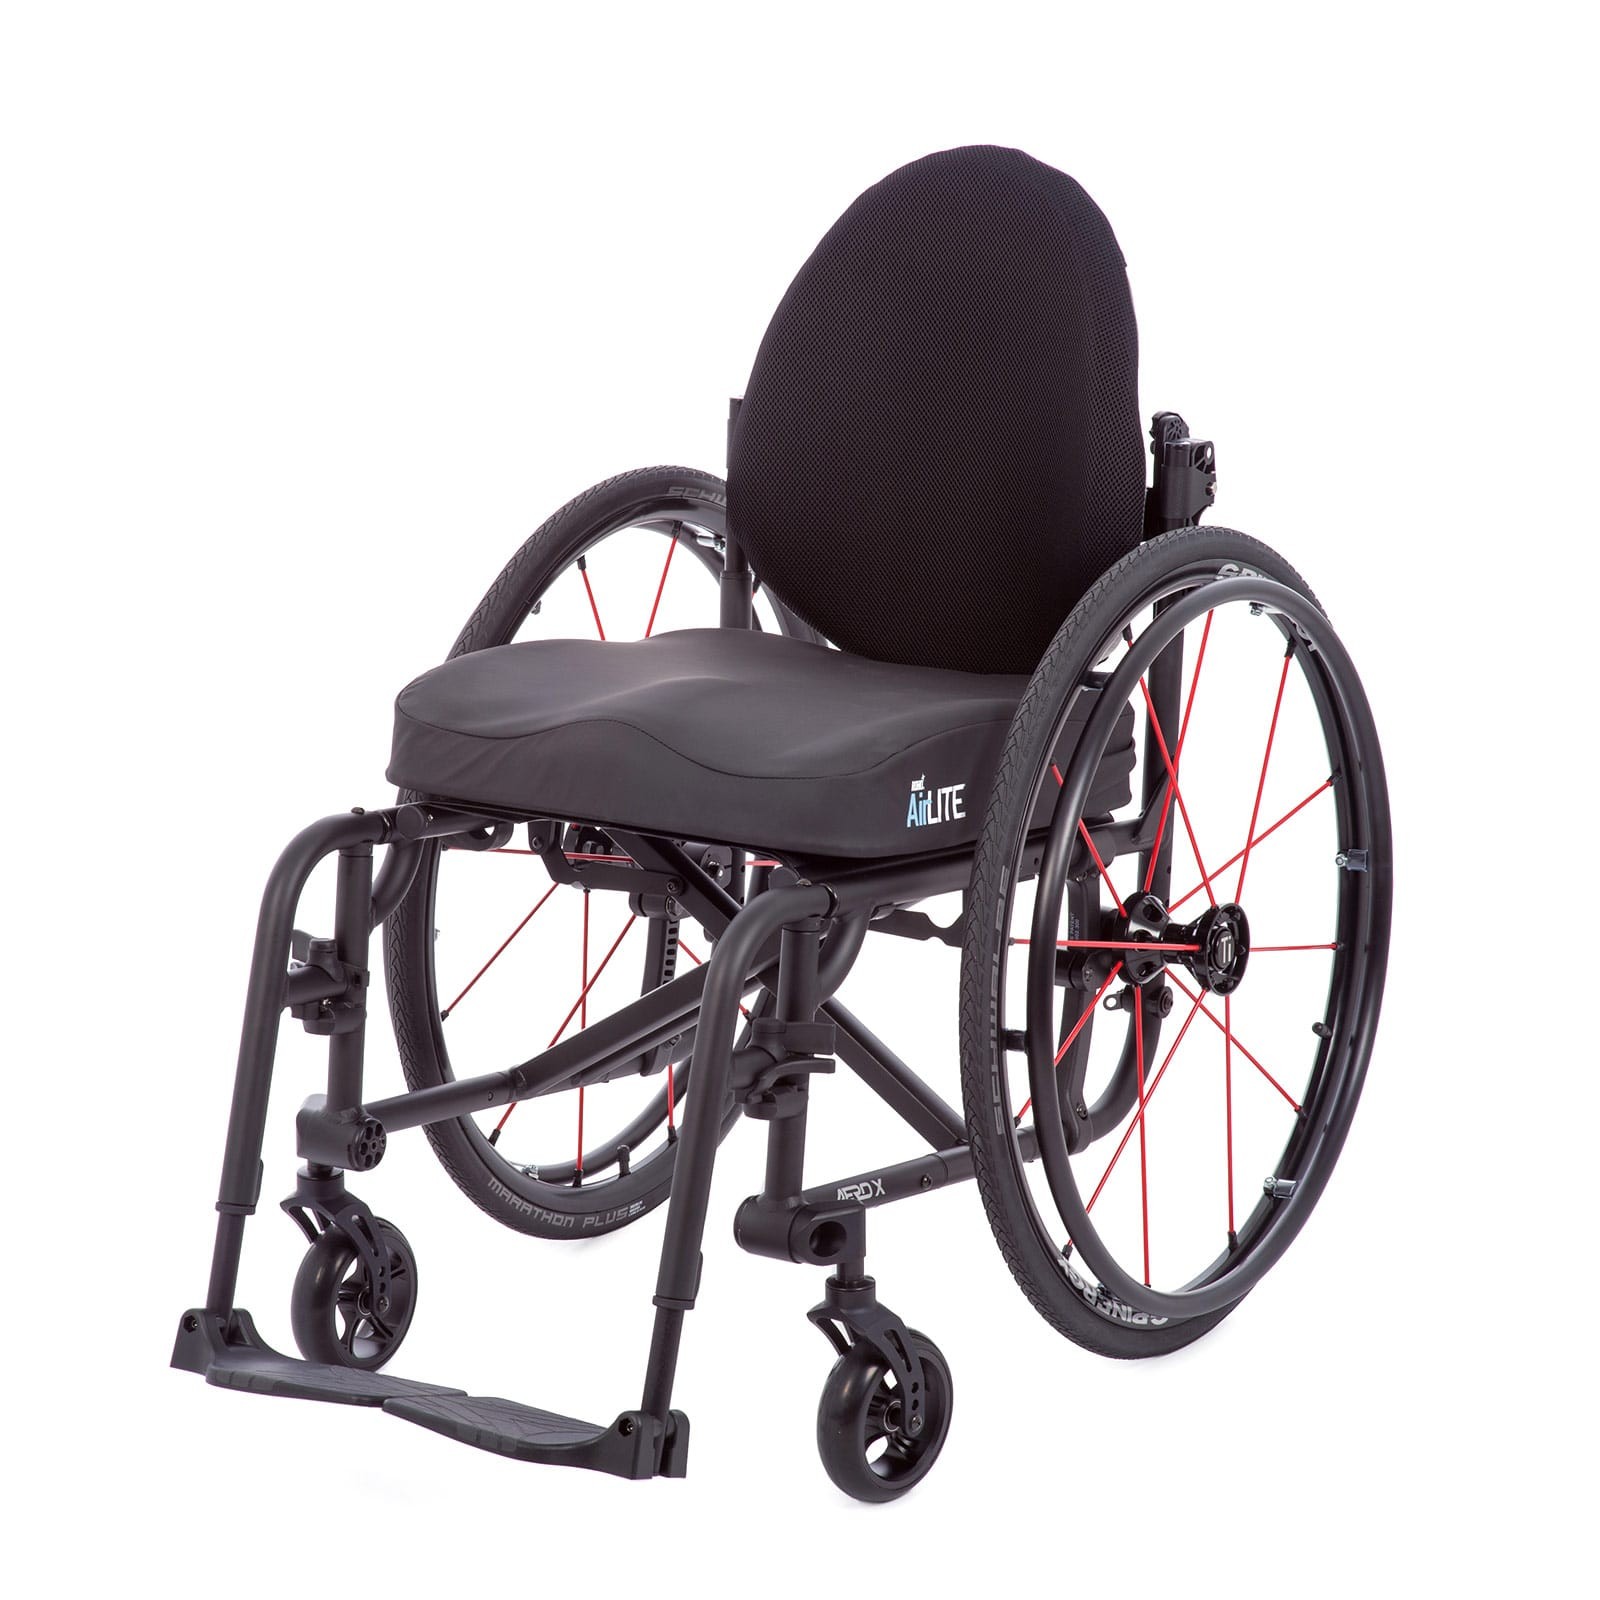 Front view of TiLite Aero X Series 2 Folding Ultralight Wheelchair